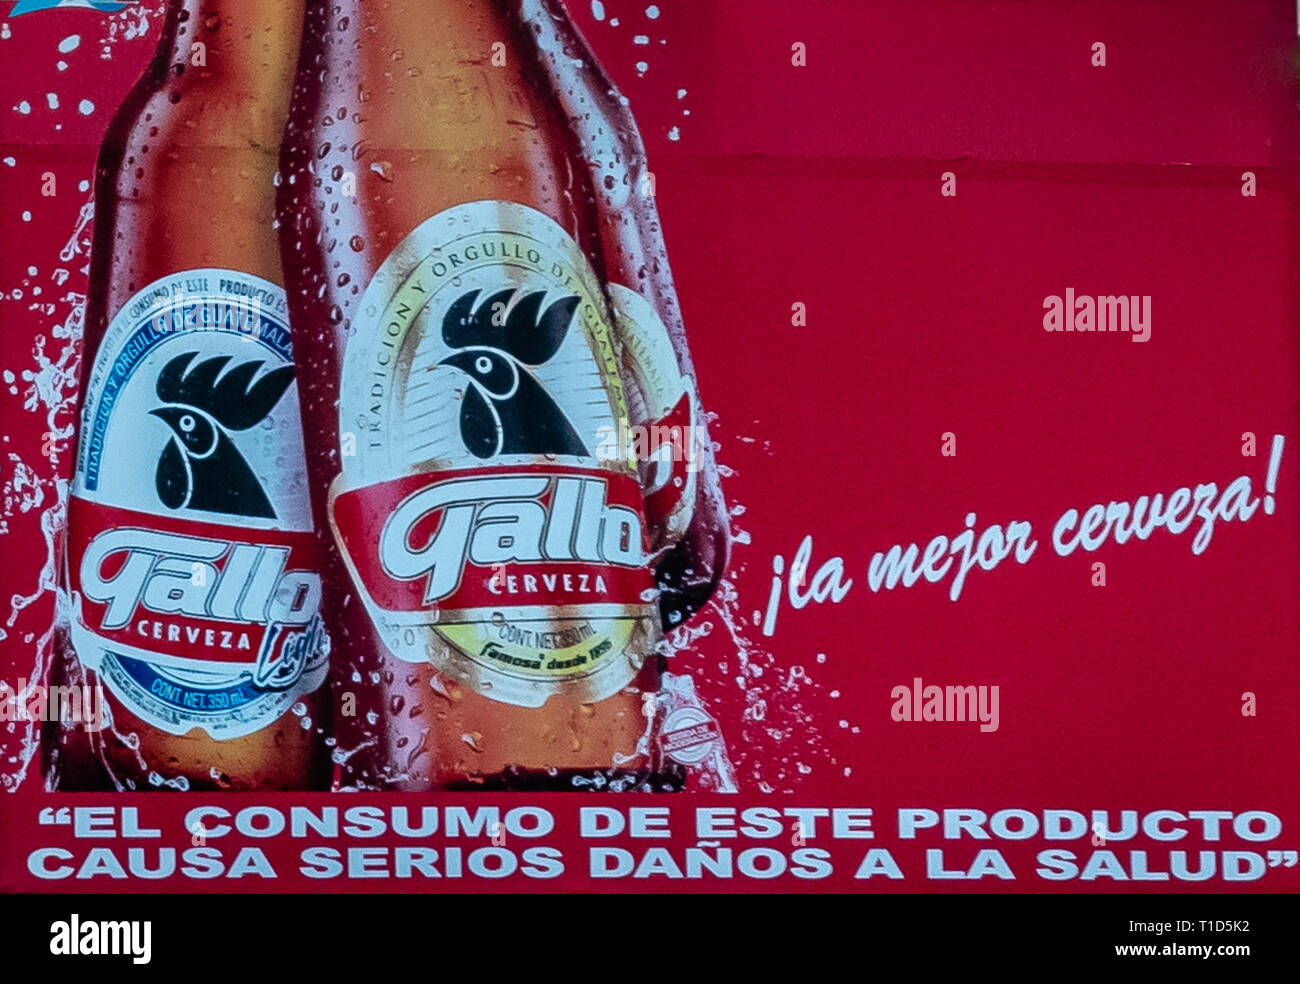 billboard for Gallo beer/cerveza in Guatemala Stock Photo